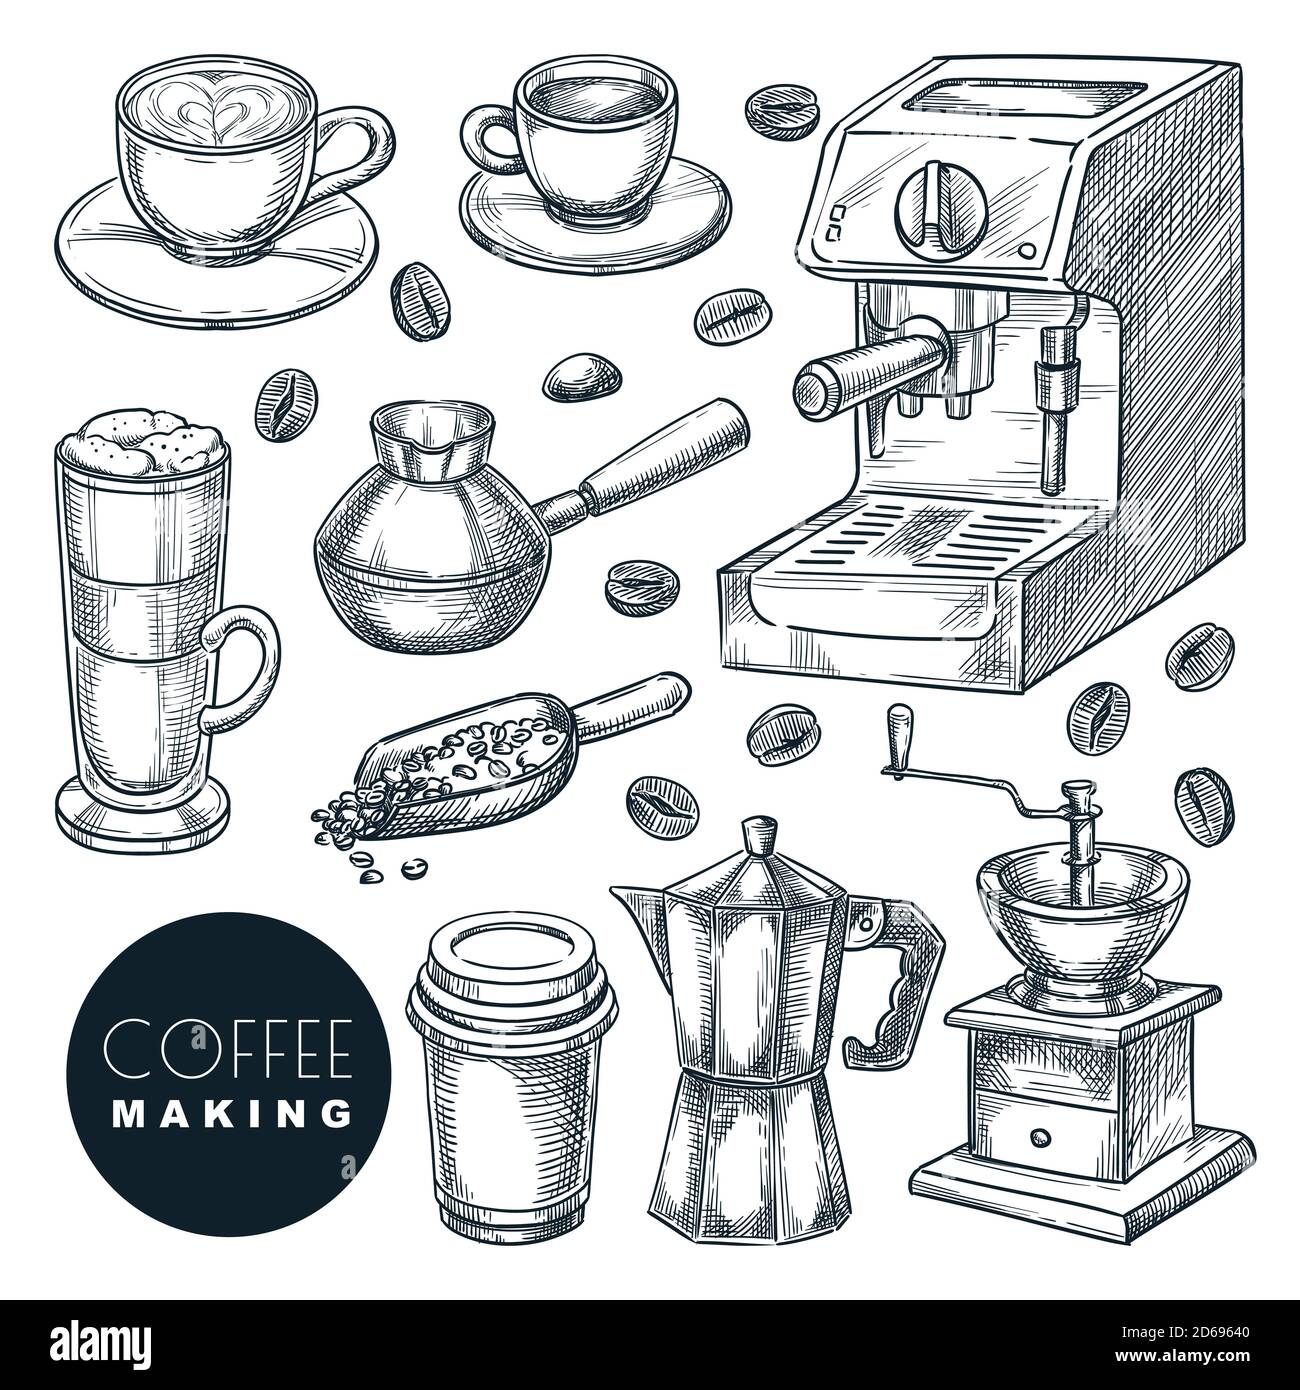 40 Stirring Mug Illustrations RoyaltyFree Vector Graphics  Clip Art   iStock  Self stirring mug